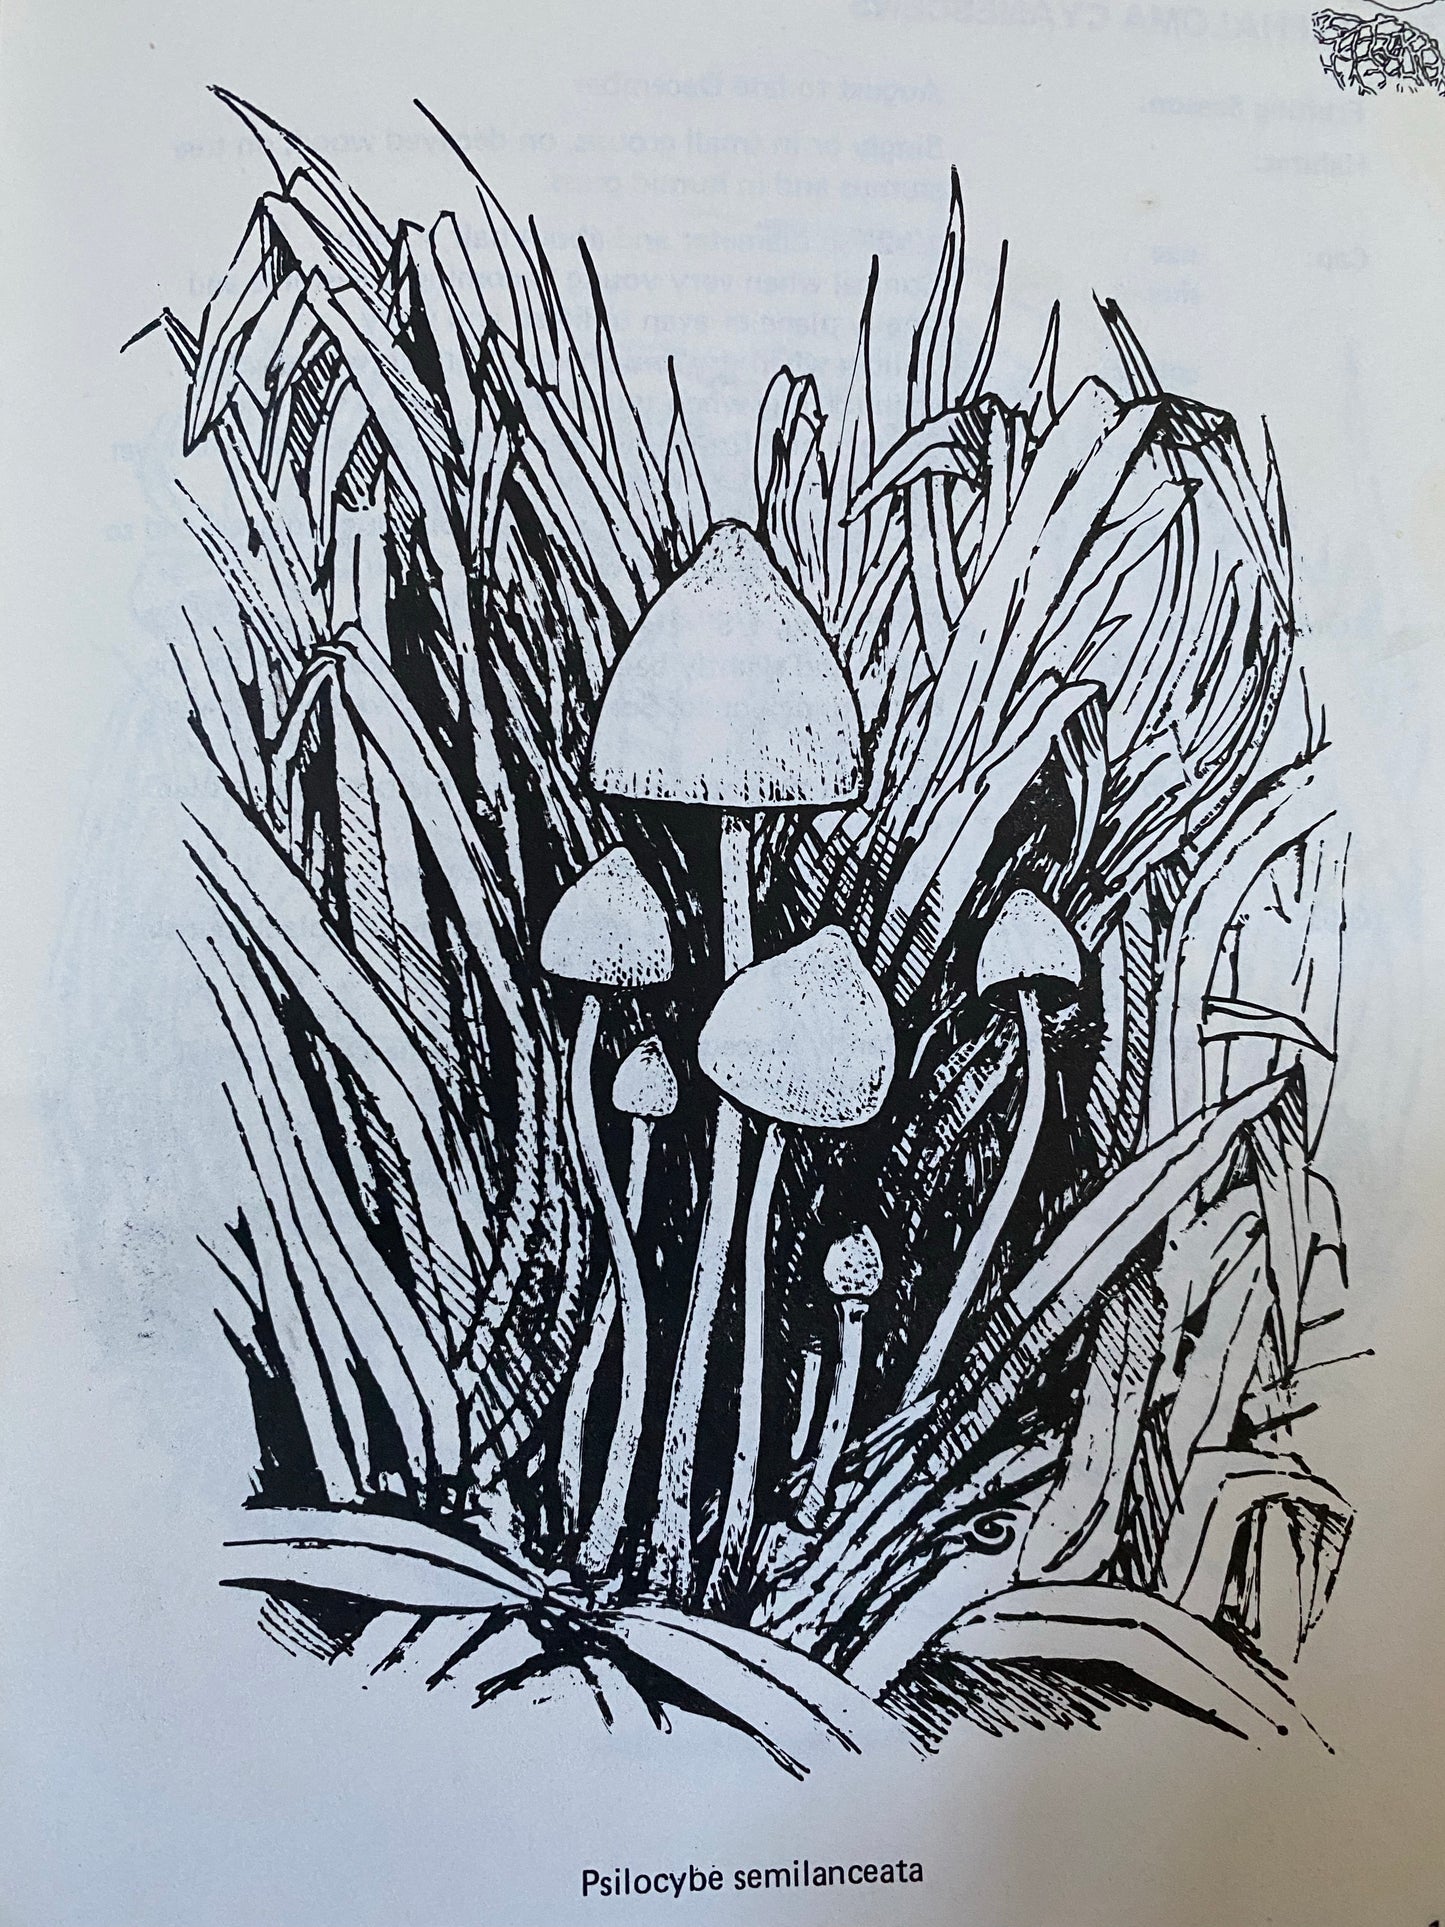 Richard Cooper - A Guide To British Psilocybin Mushrooms